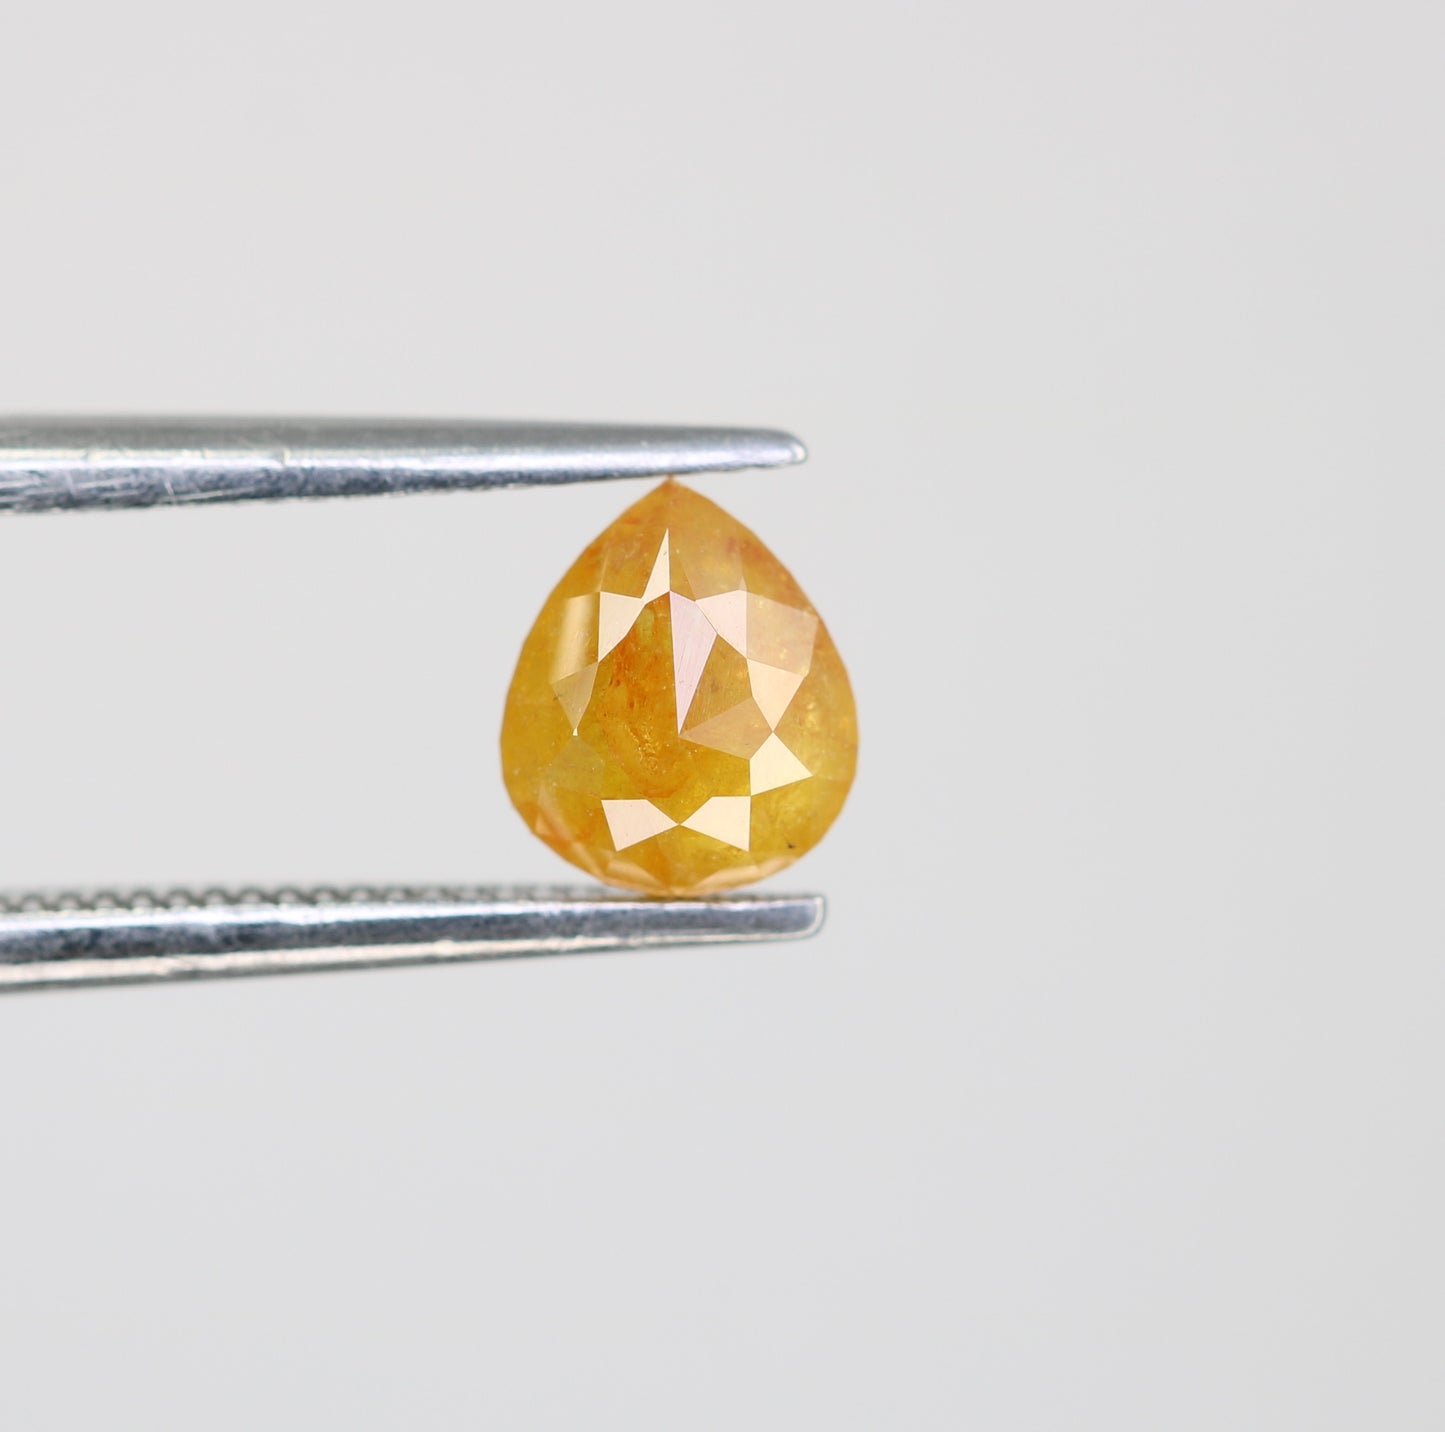 0.85 CT Orange Pear Shape Diamond For Engagement Ring